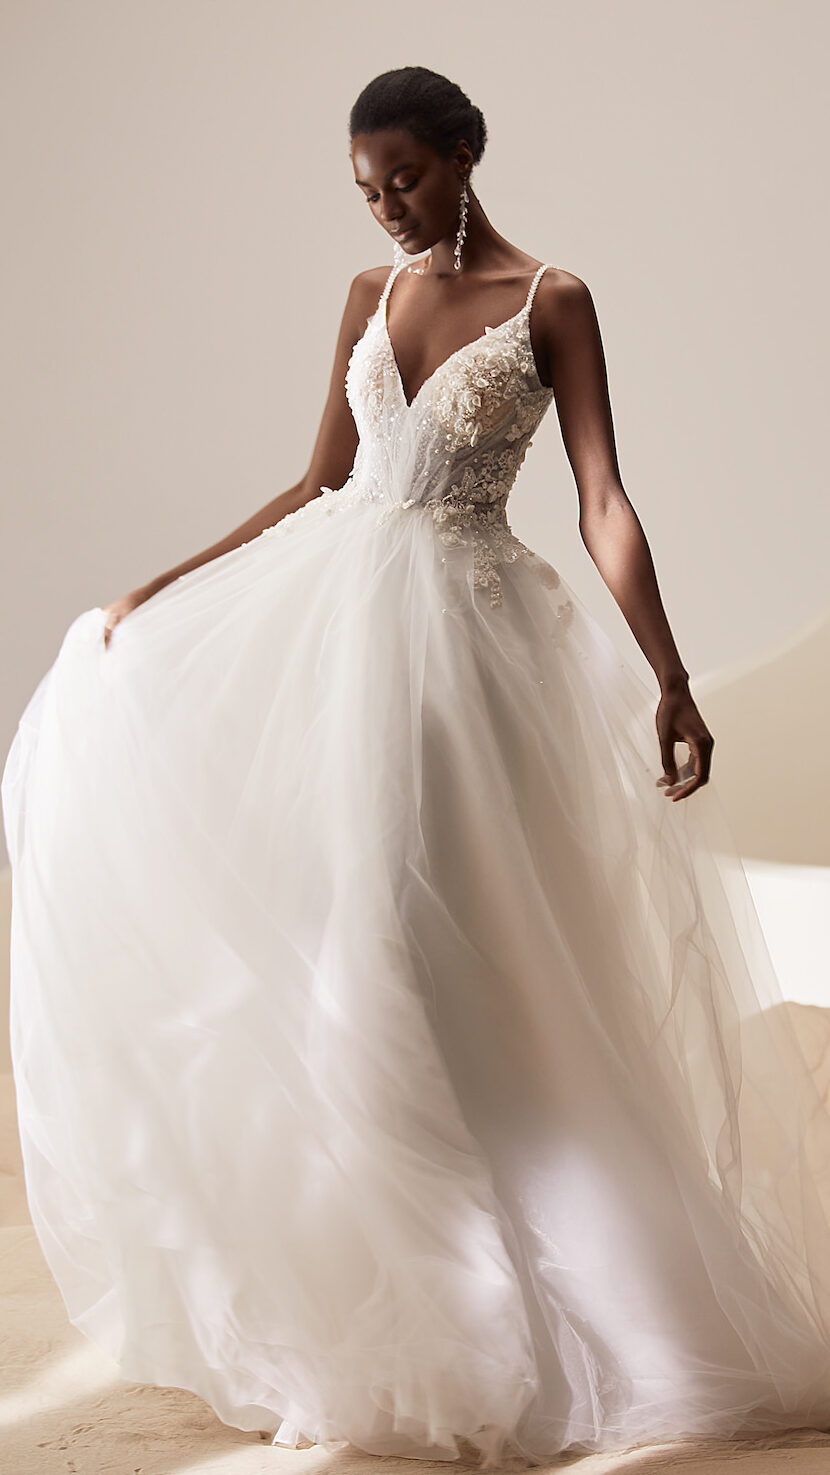 Elegant Wedding Dresses by Milla Nova - Valerie white lace